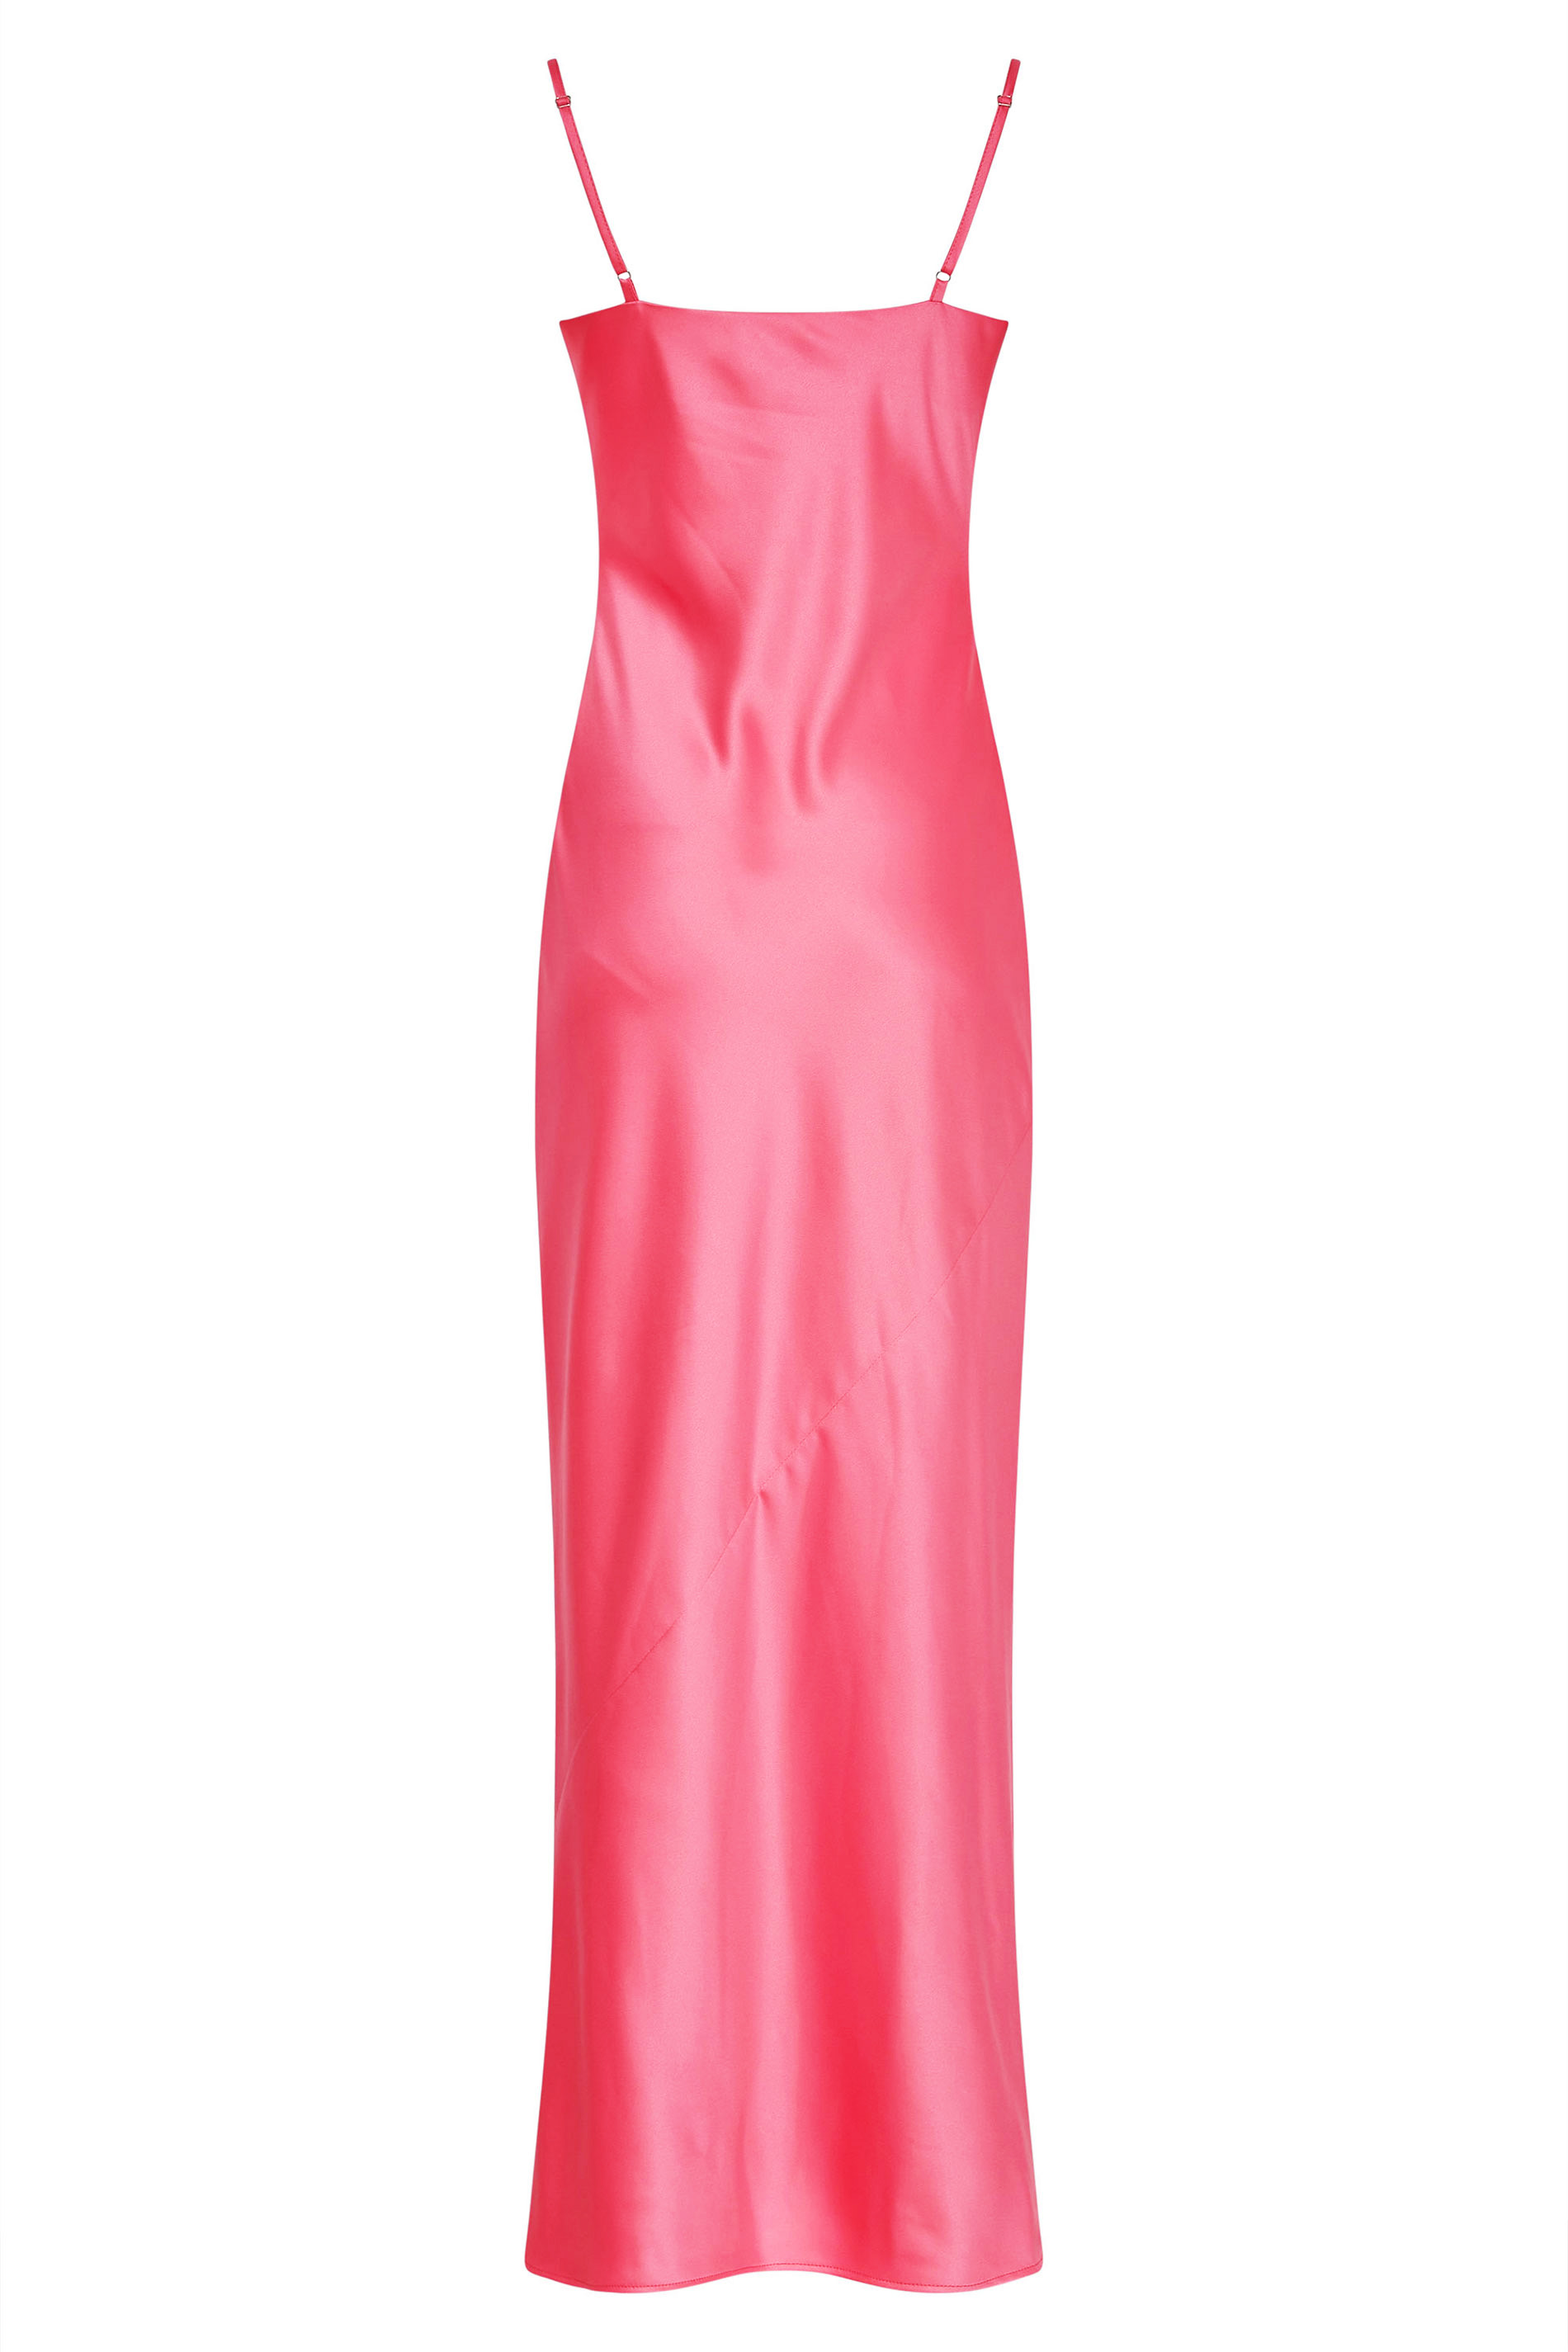 LTS Tall Women's Hot Pink Satin Maxi Slip Dress | Long Tall Sally 3